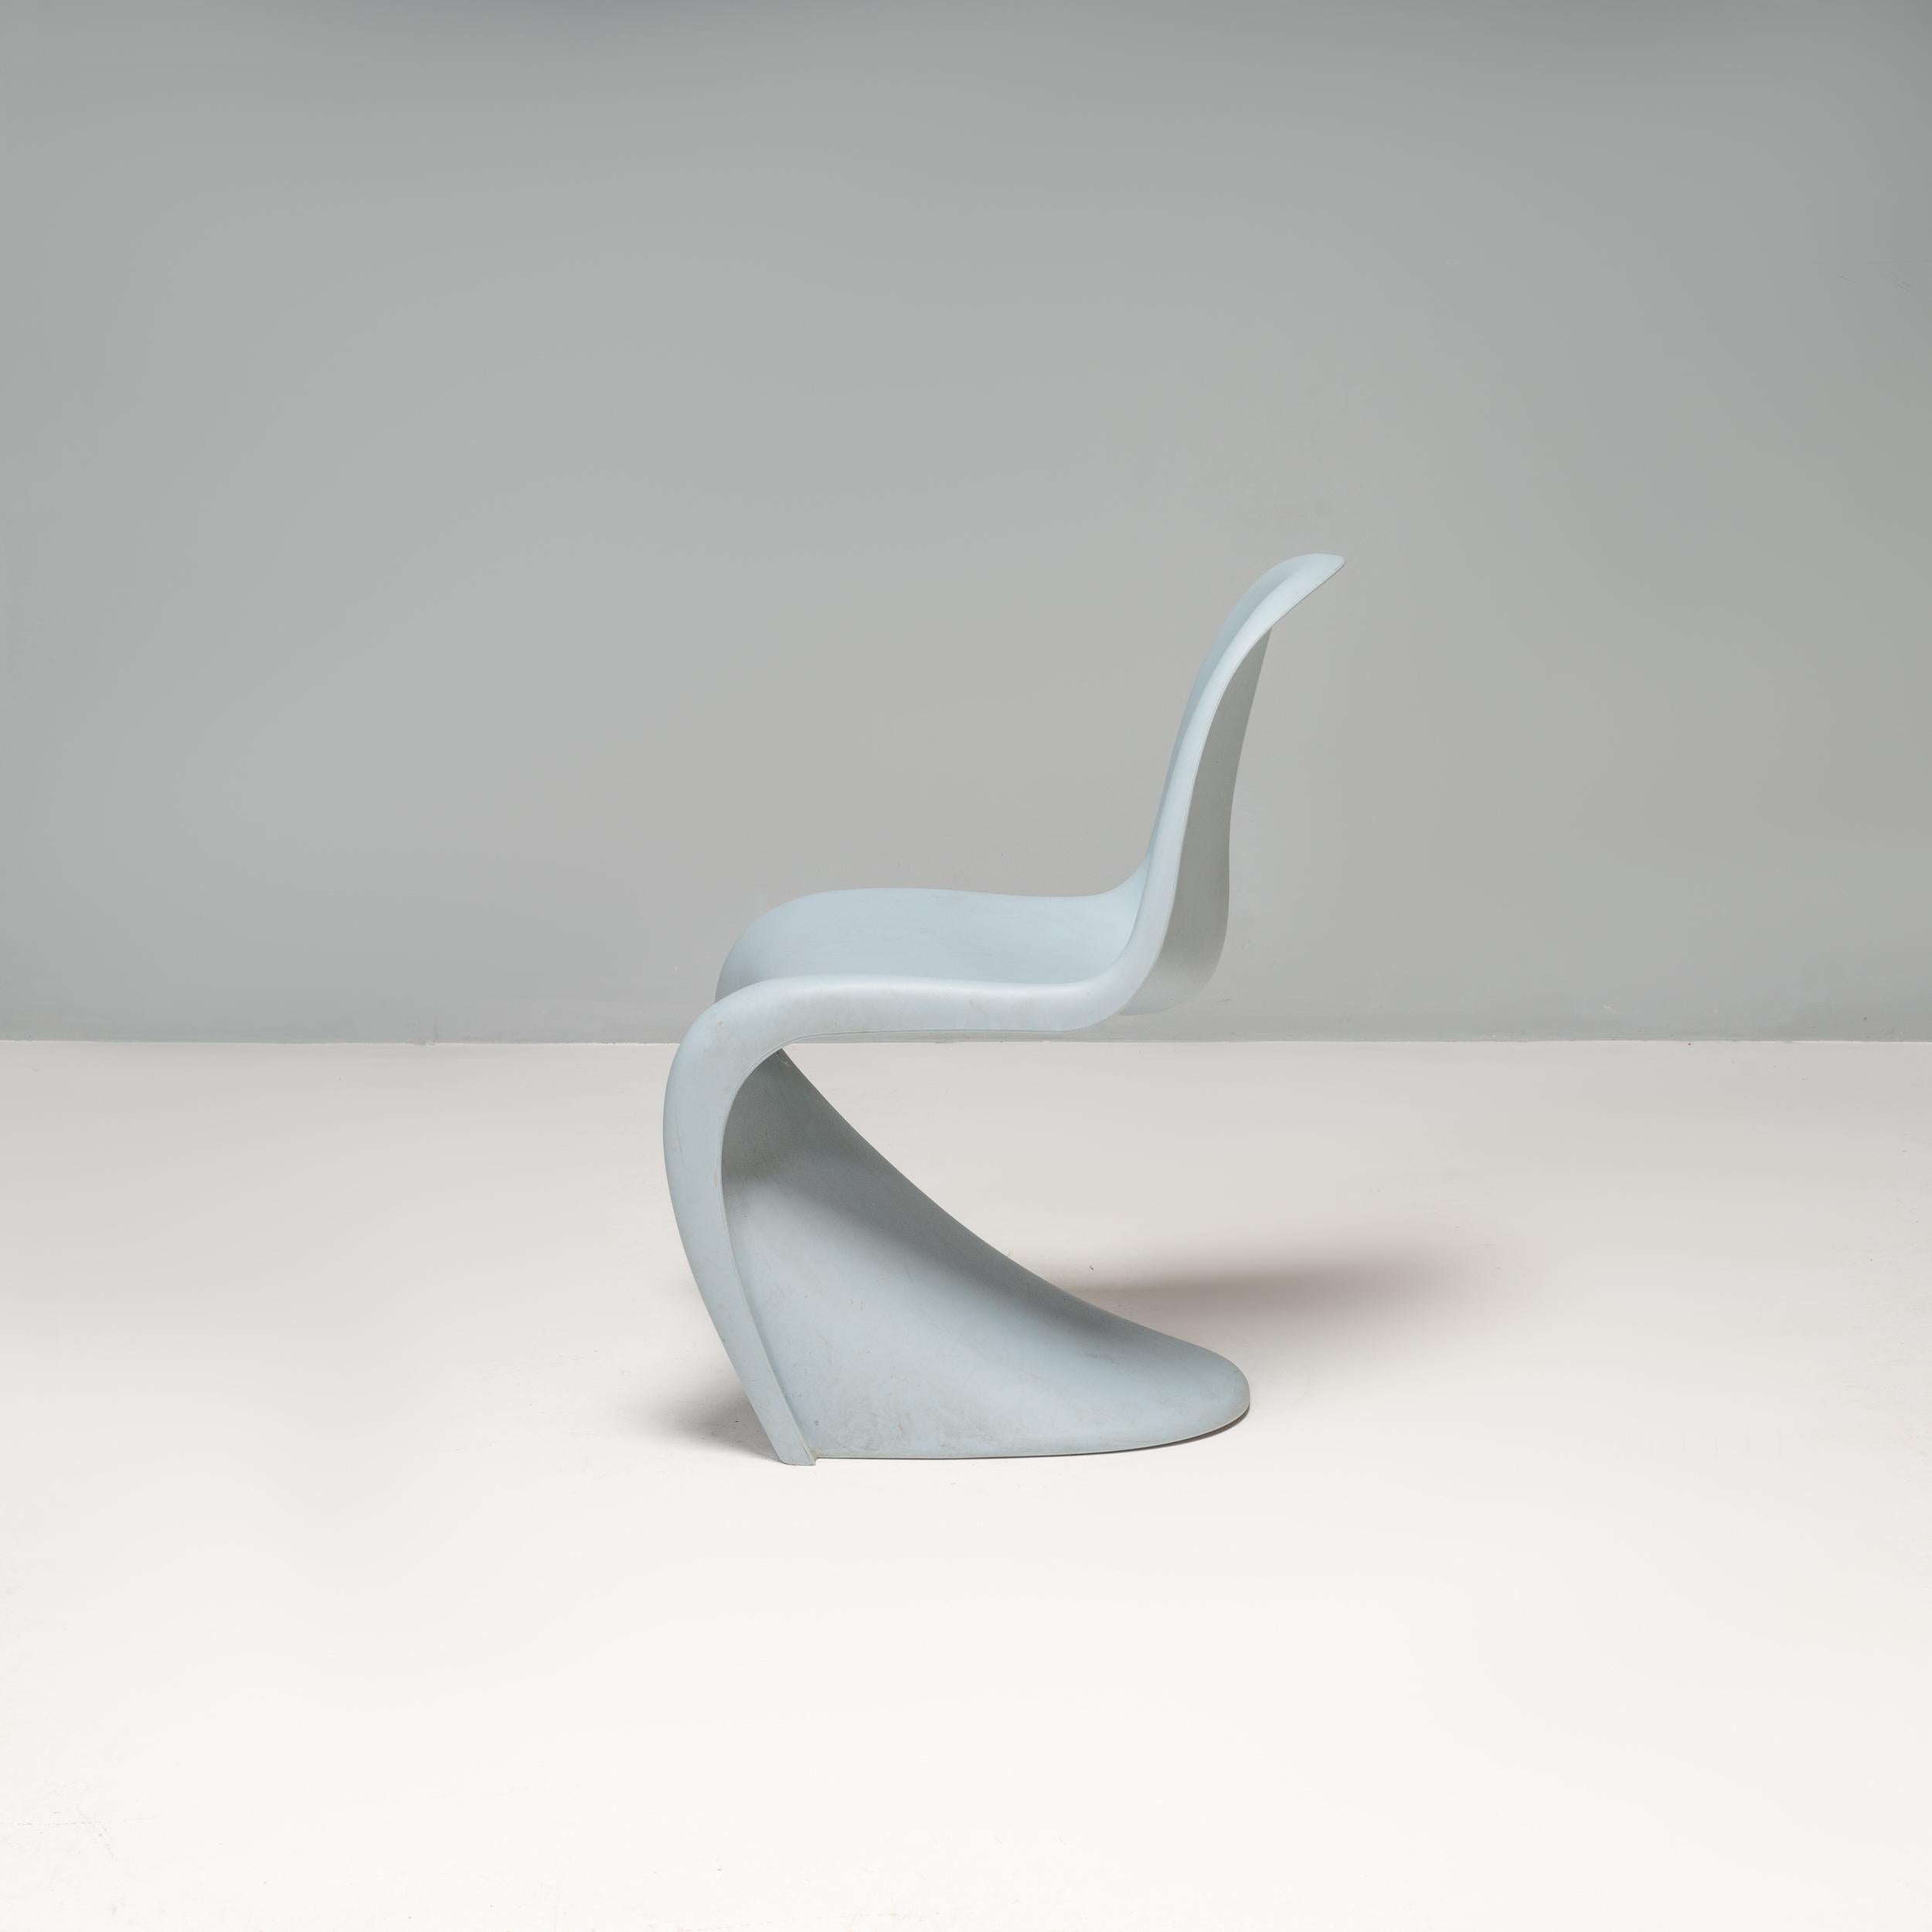 Swiss Mid-Century Modern Light Blue Panton Chairs by Verner Panton for Vitra